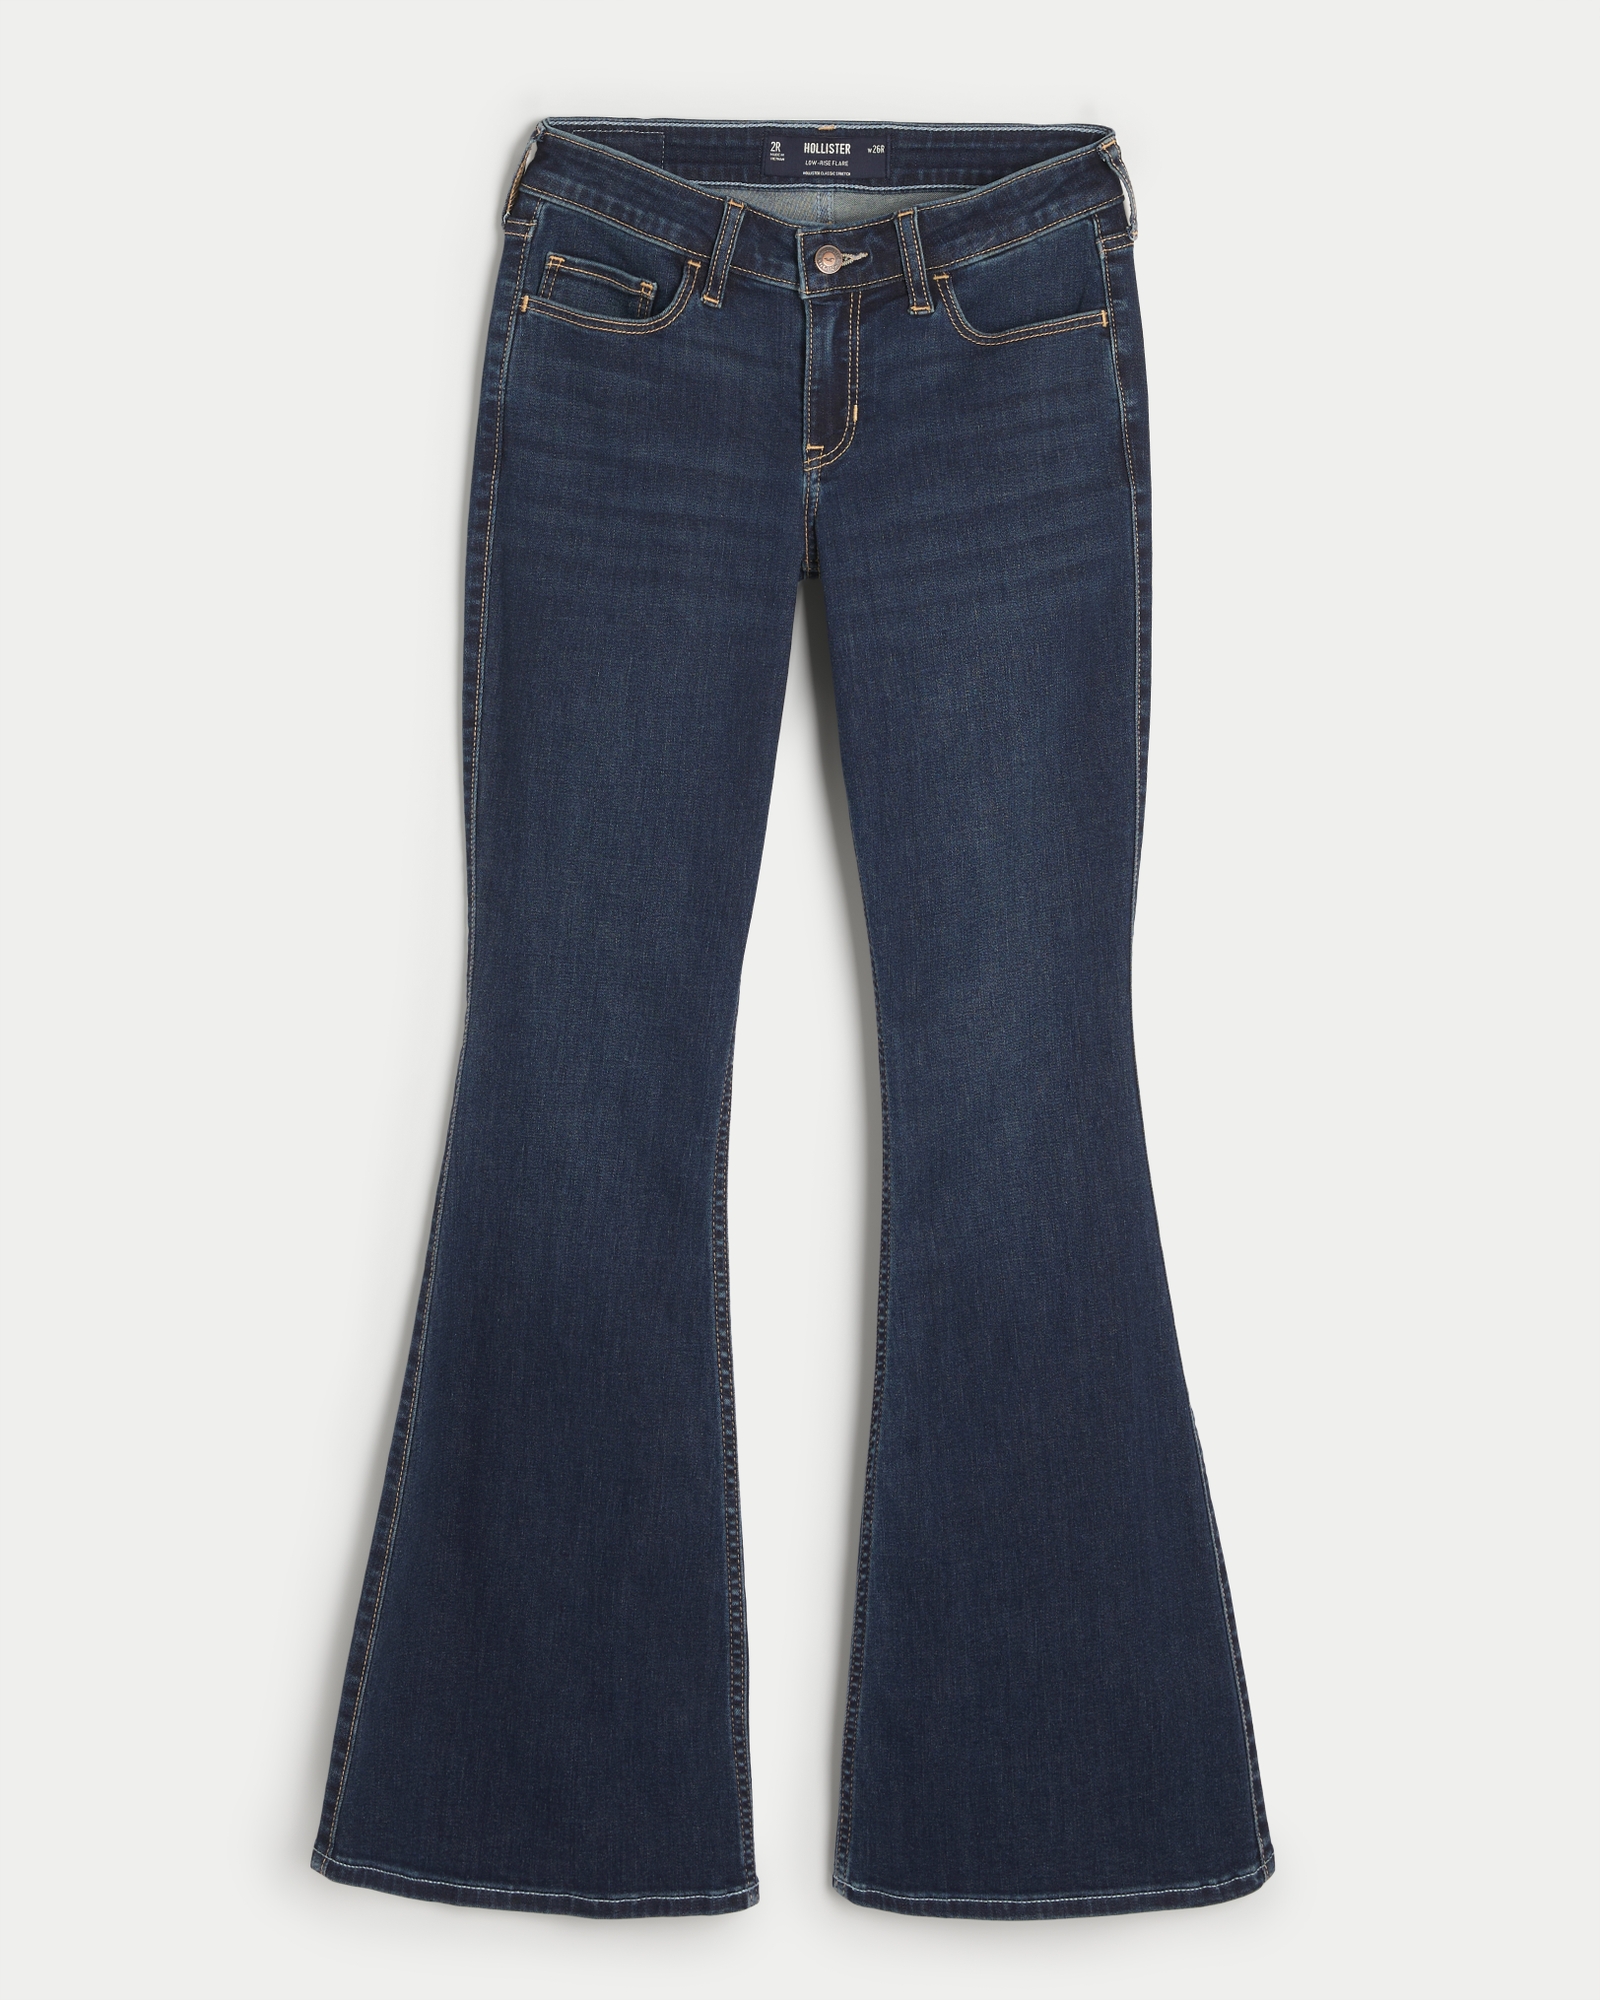 Hollister low rise super skinny jeans womens sz 1S 25x28 distress light  wash 